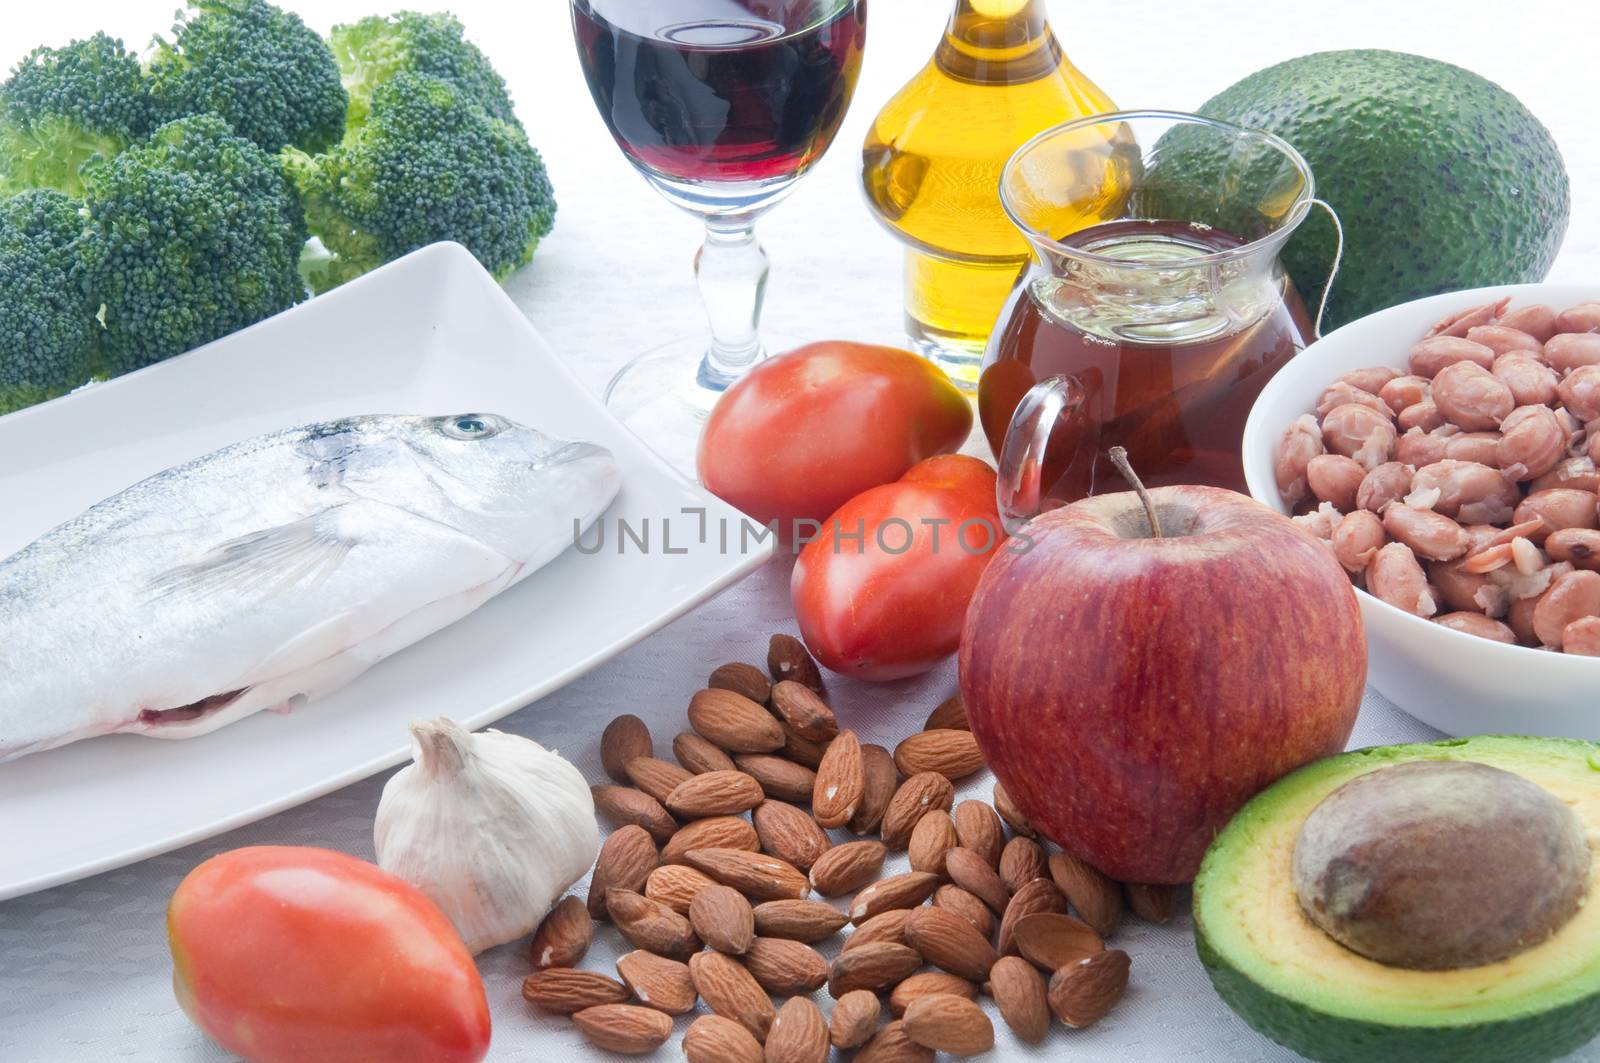 10 foods to lower cholesterol : tea , avocado , fruit , vegetables,walnuts , almonds , fish , wine